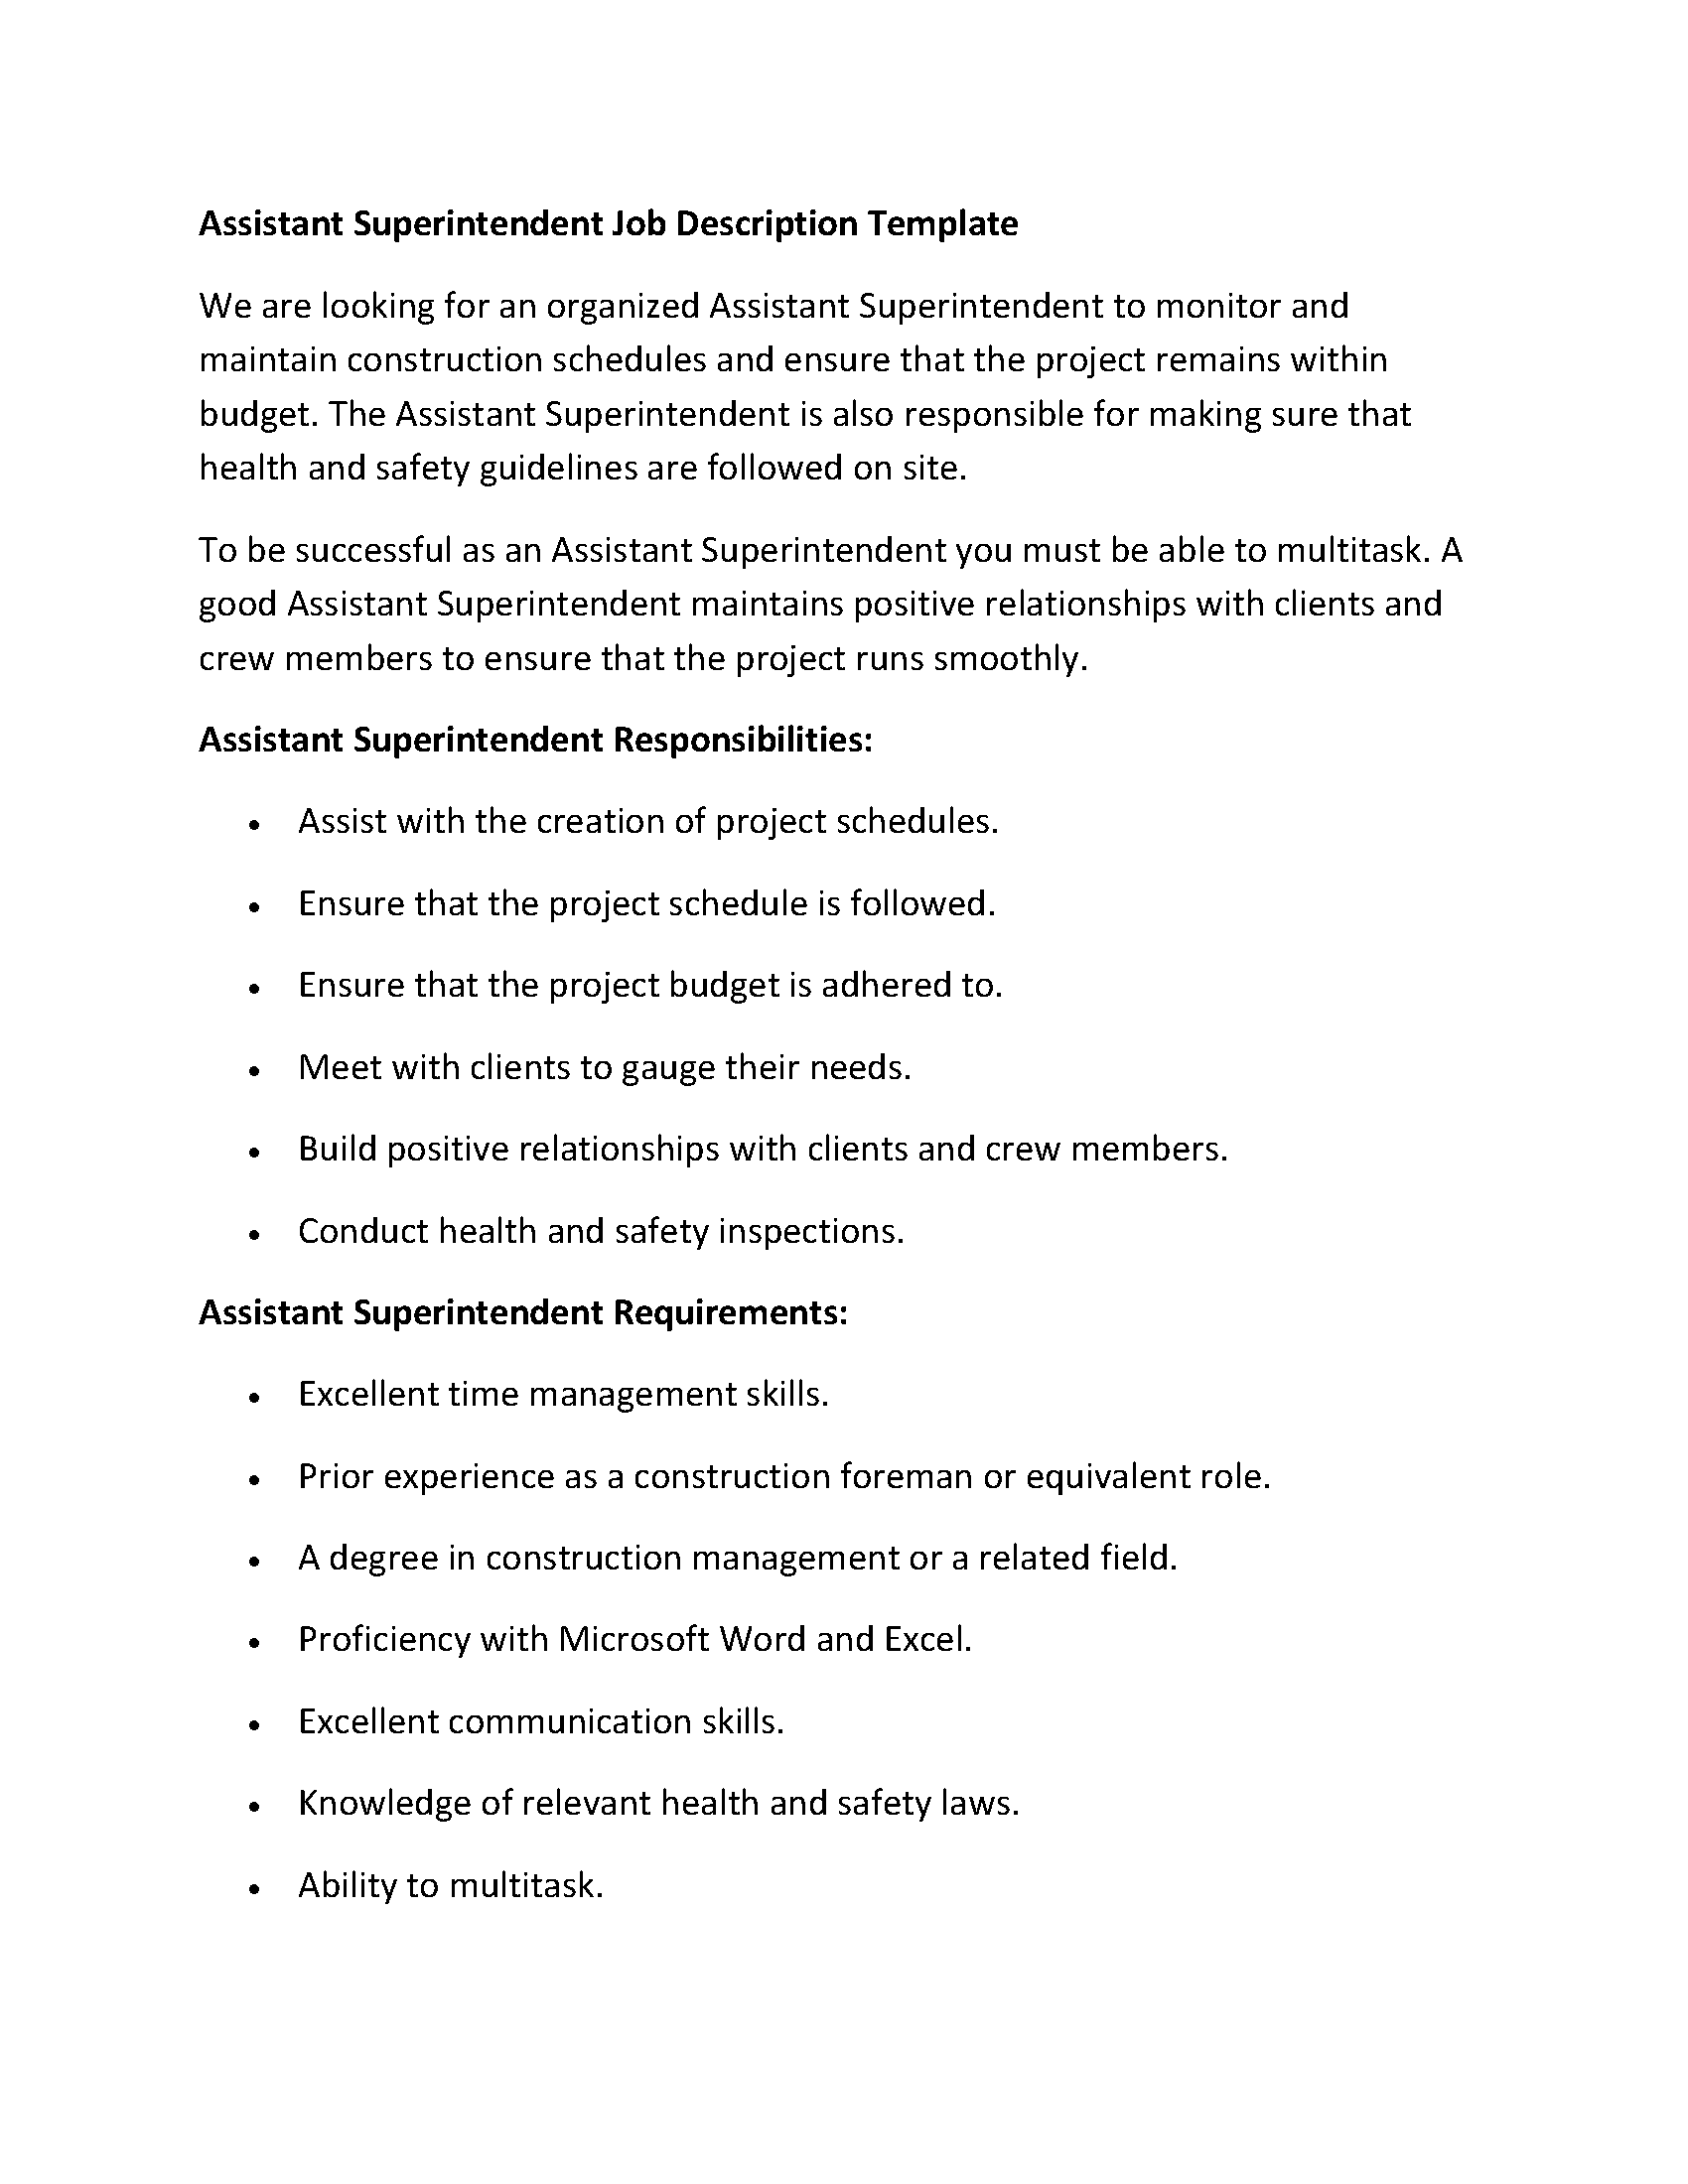 Assistant Superintendent Job Description Template